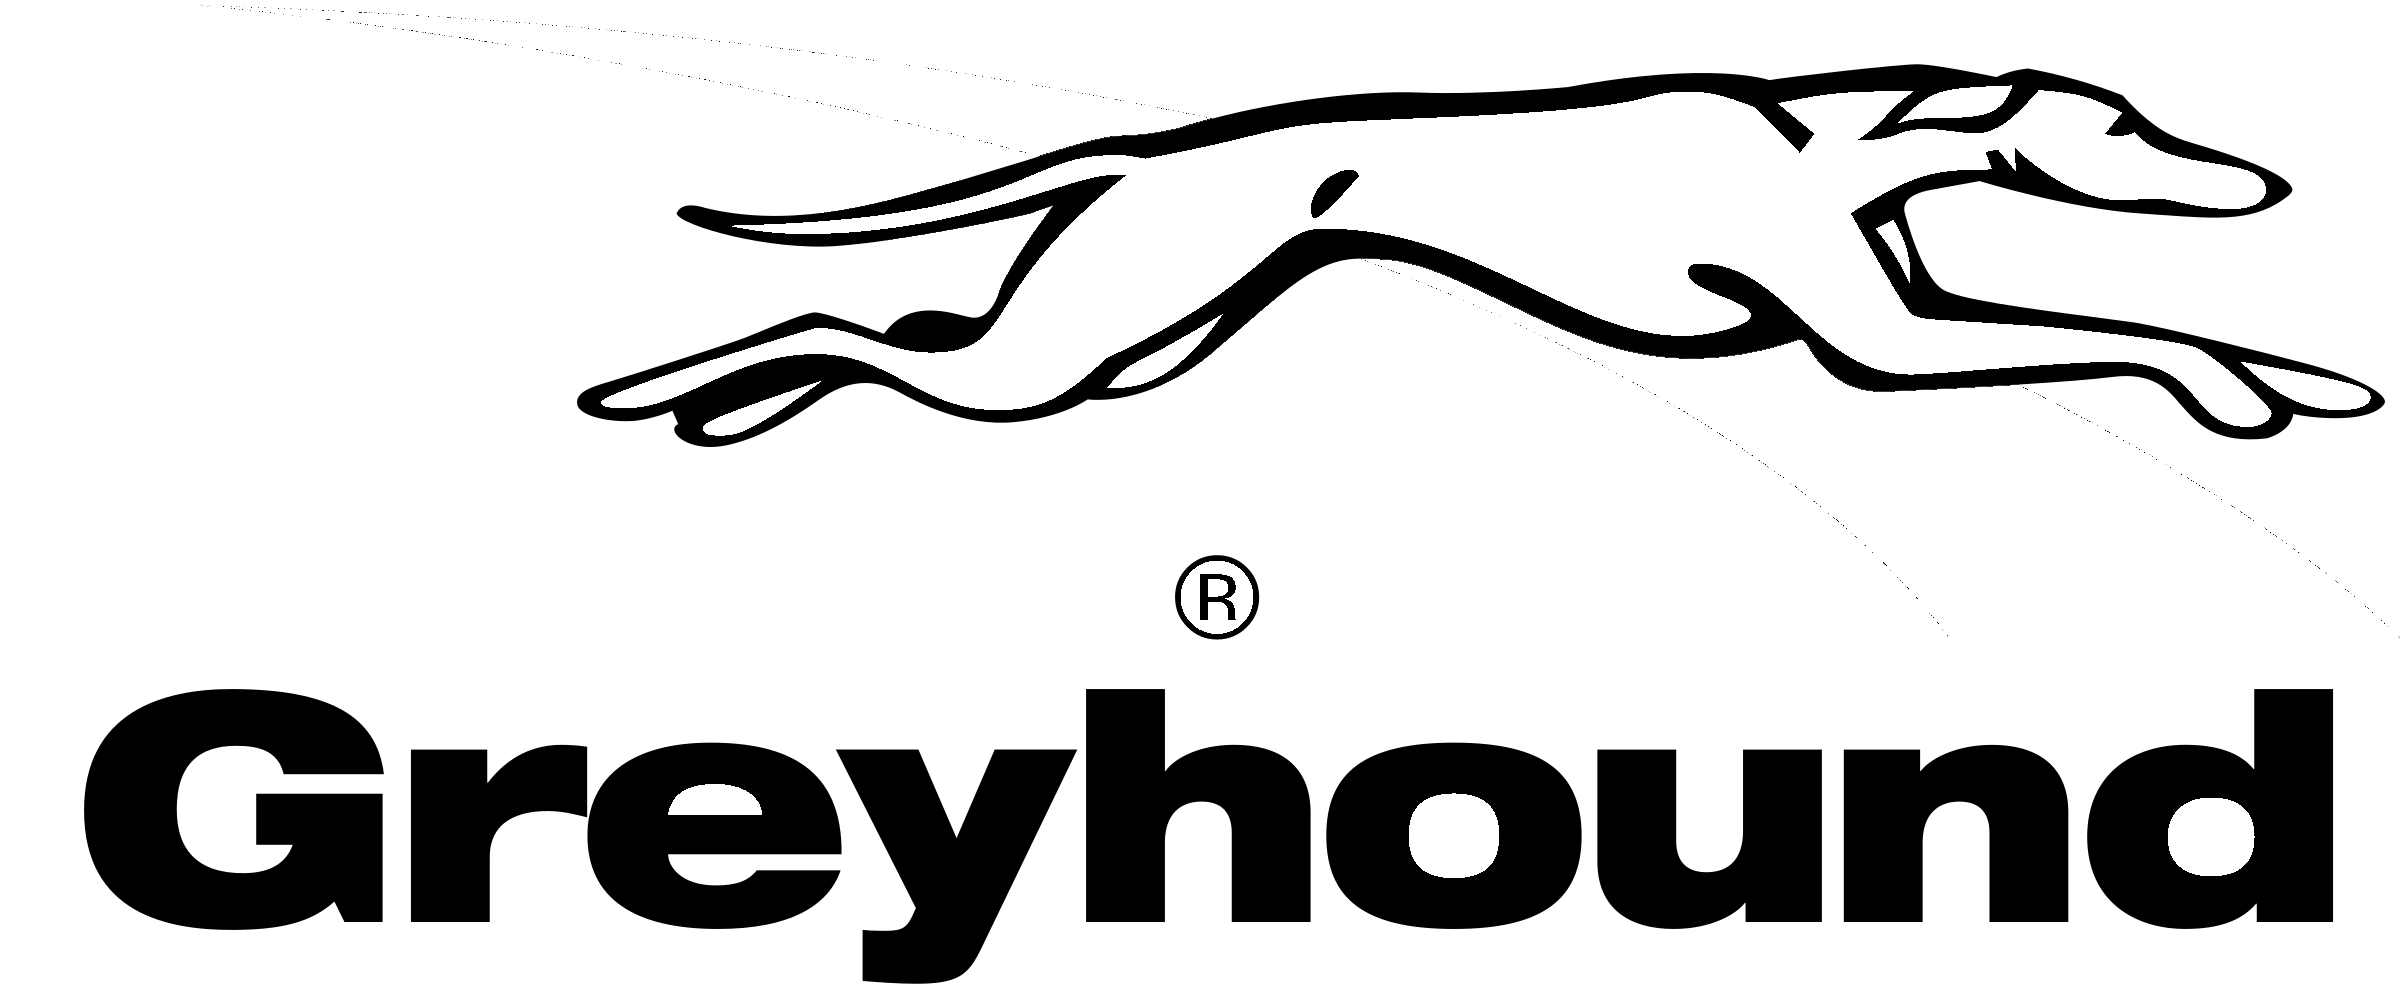 greyhound-logo-black-and-white.png